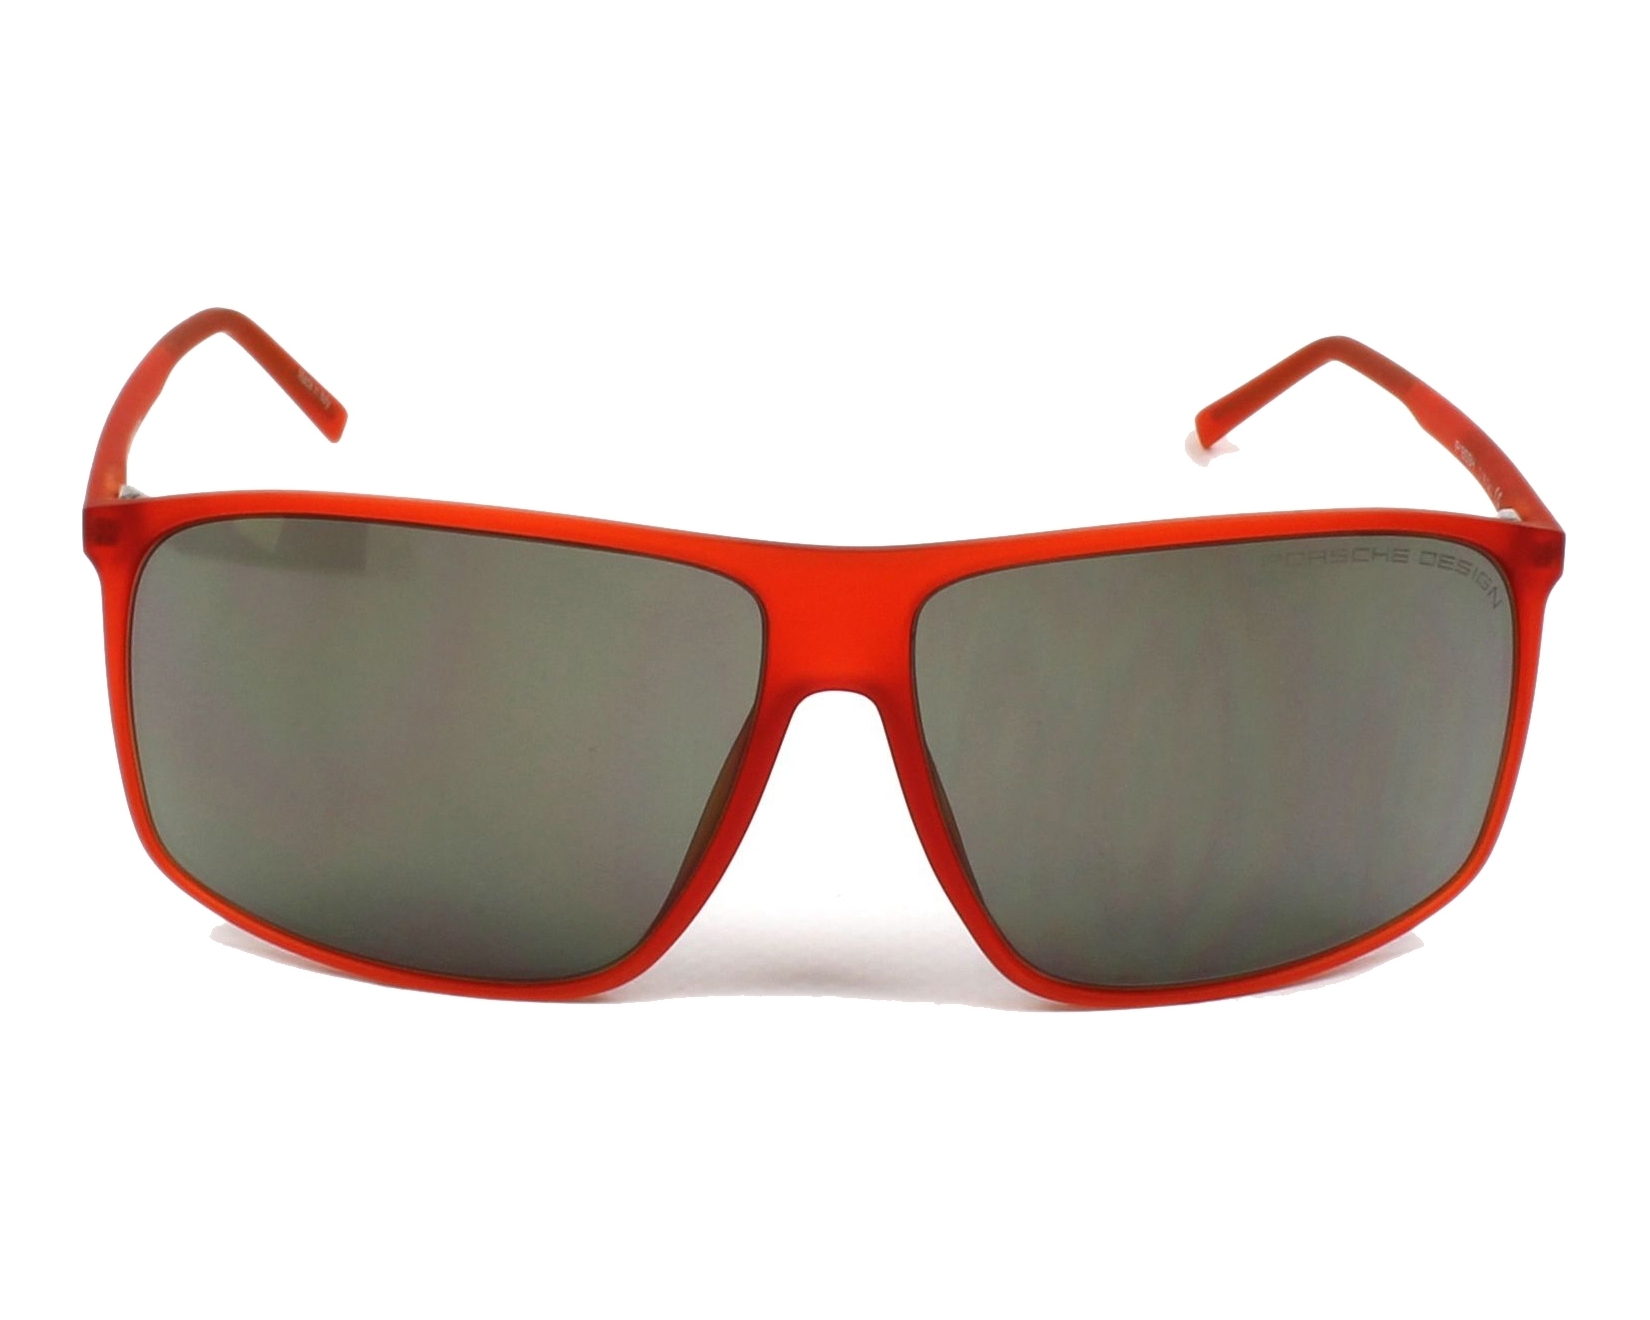 Porsche P8594-C-V578 Rectangular Men's Orange Frame Grey Lens Sunglasses NWT - image 2 of 2